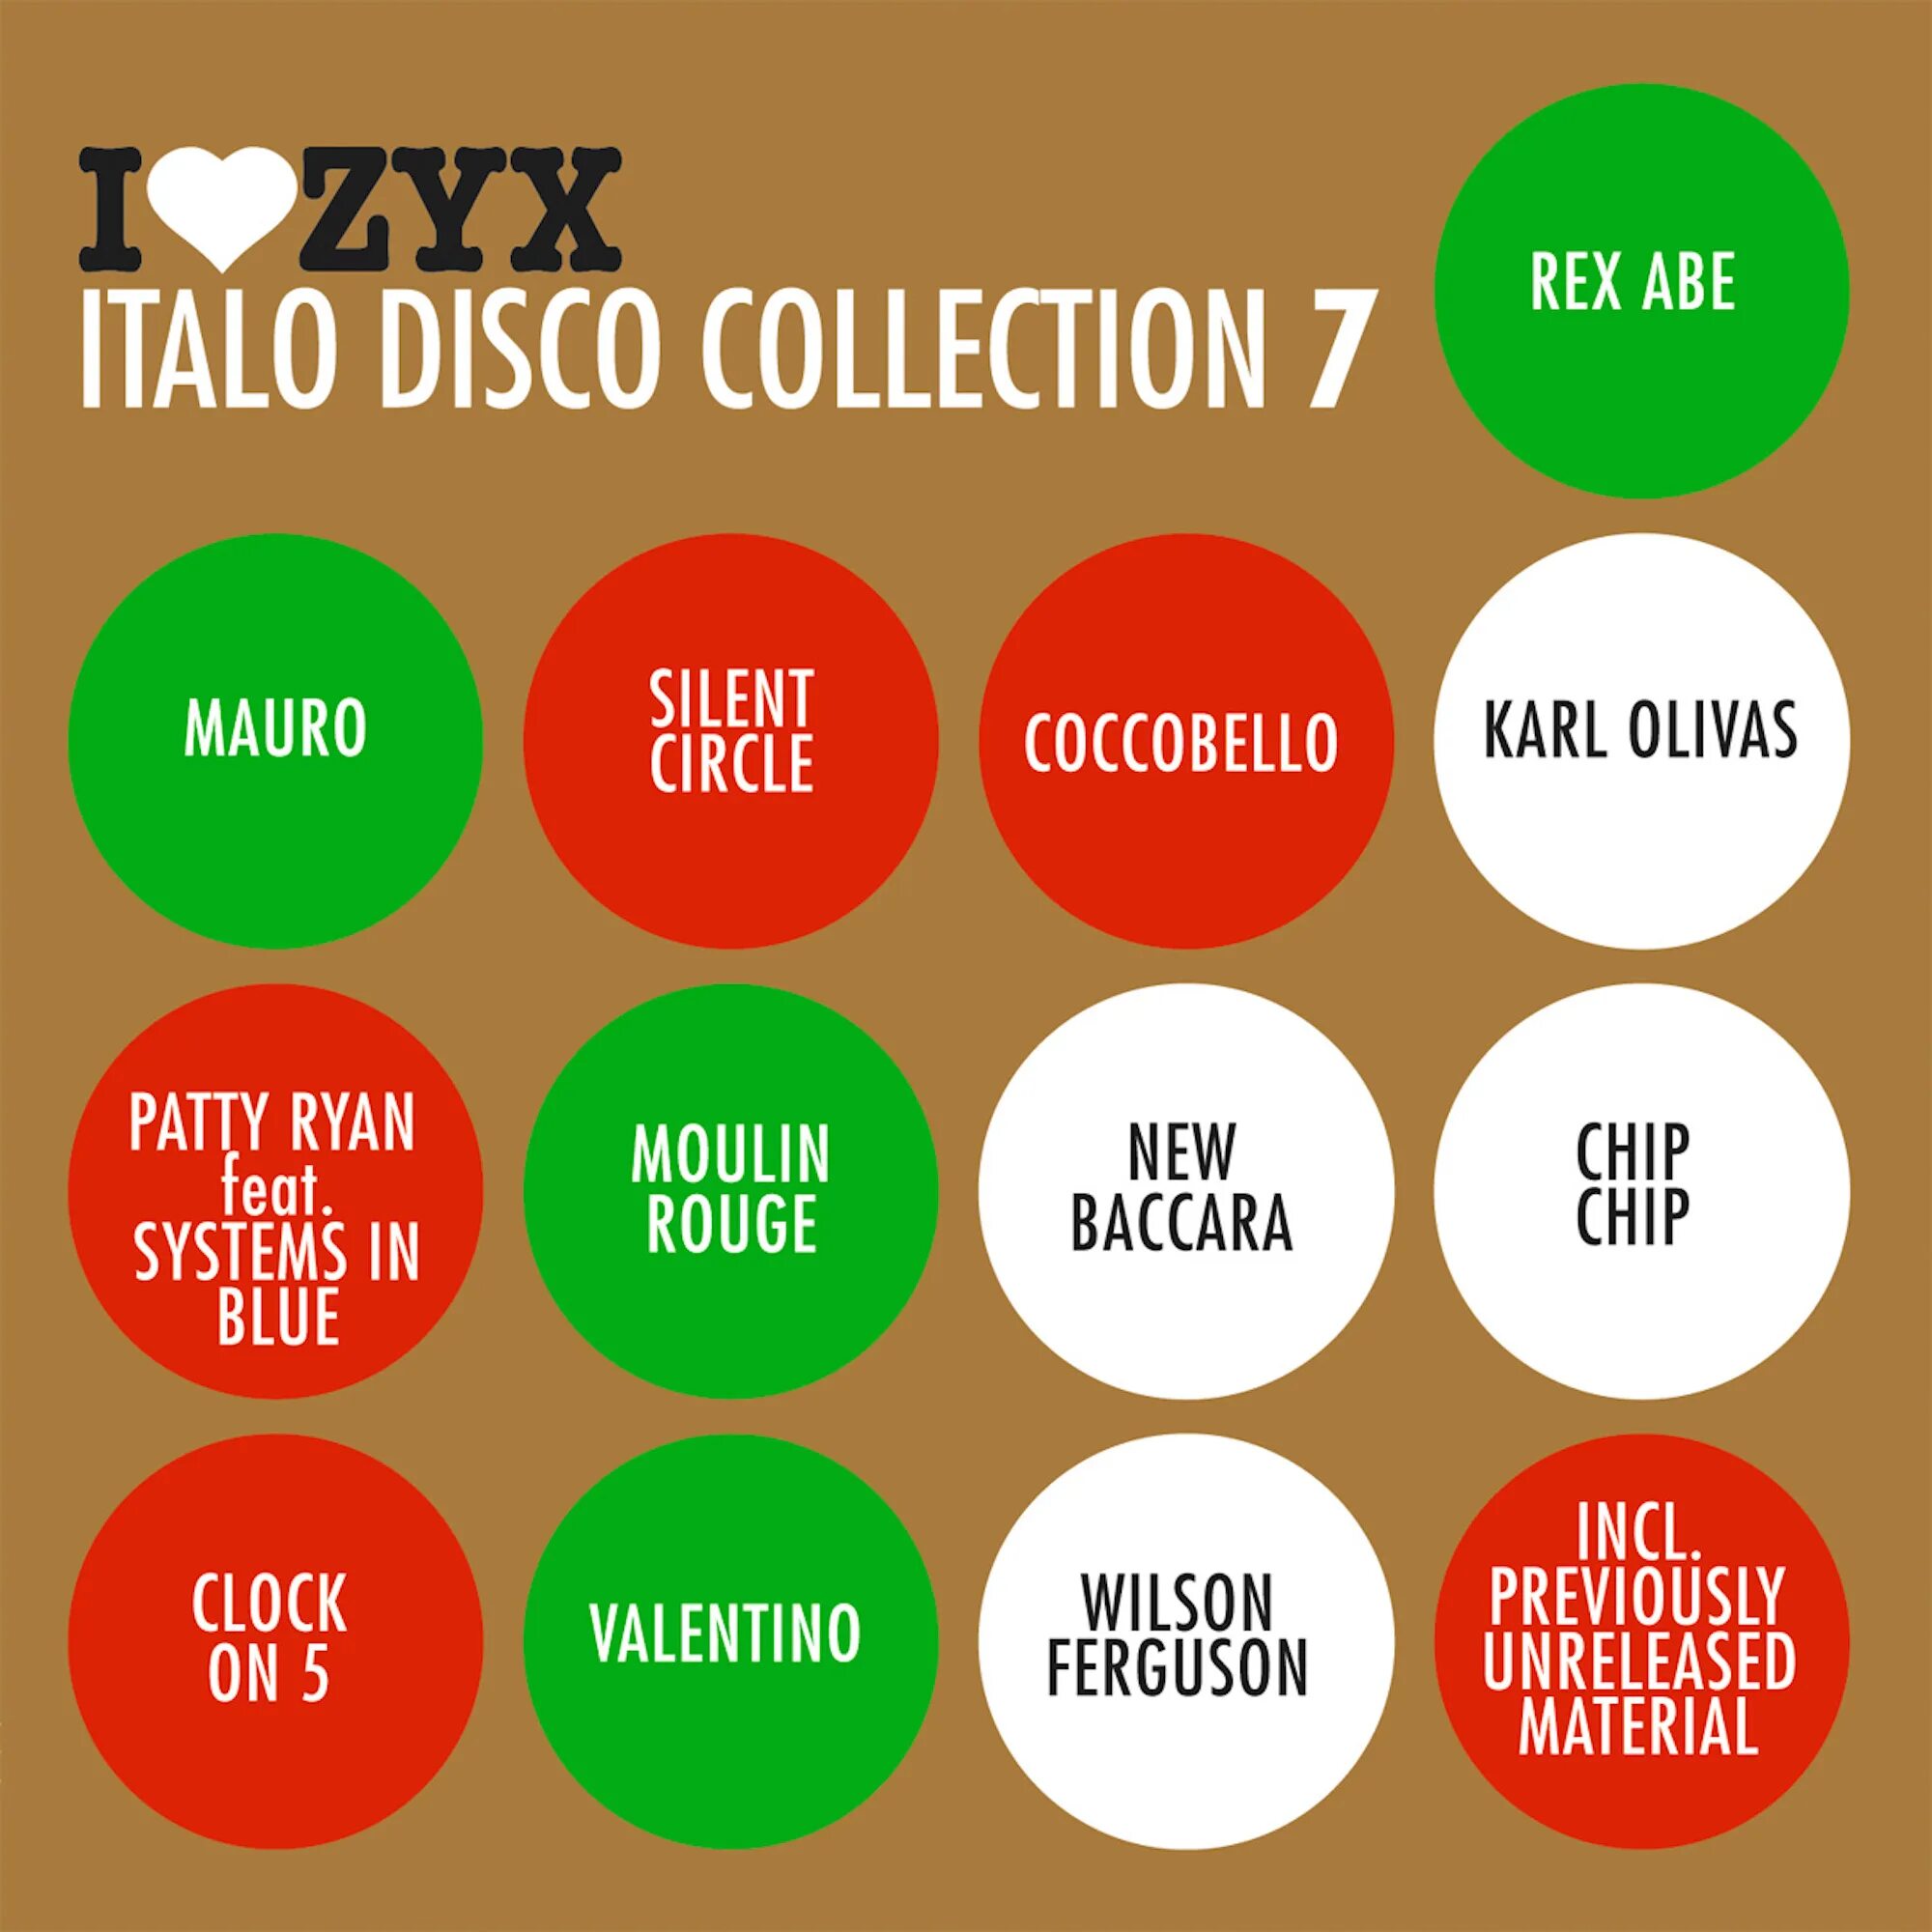 Italo disco collection. 2007 I Love ZYX Italo Disco collection Vol.7. ZYX Disco collection. ZYX Italo Disco Spacesynth collection 7. Italo Disco collection фото.